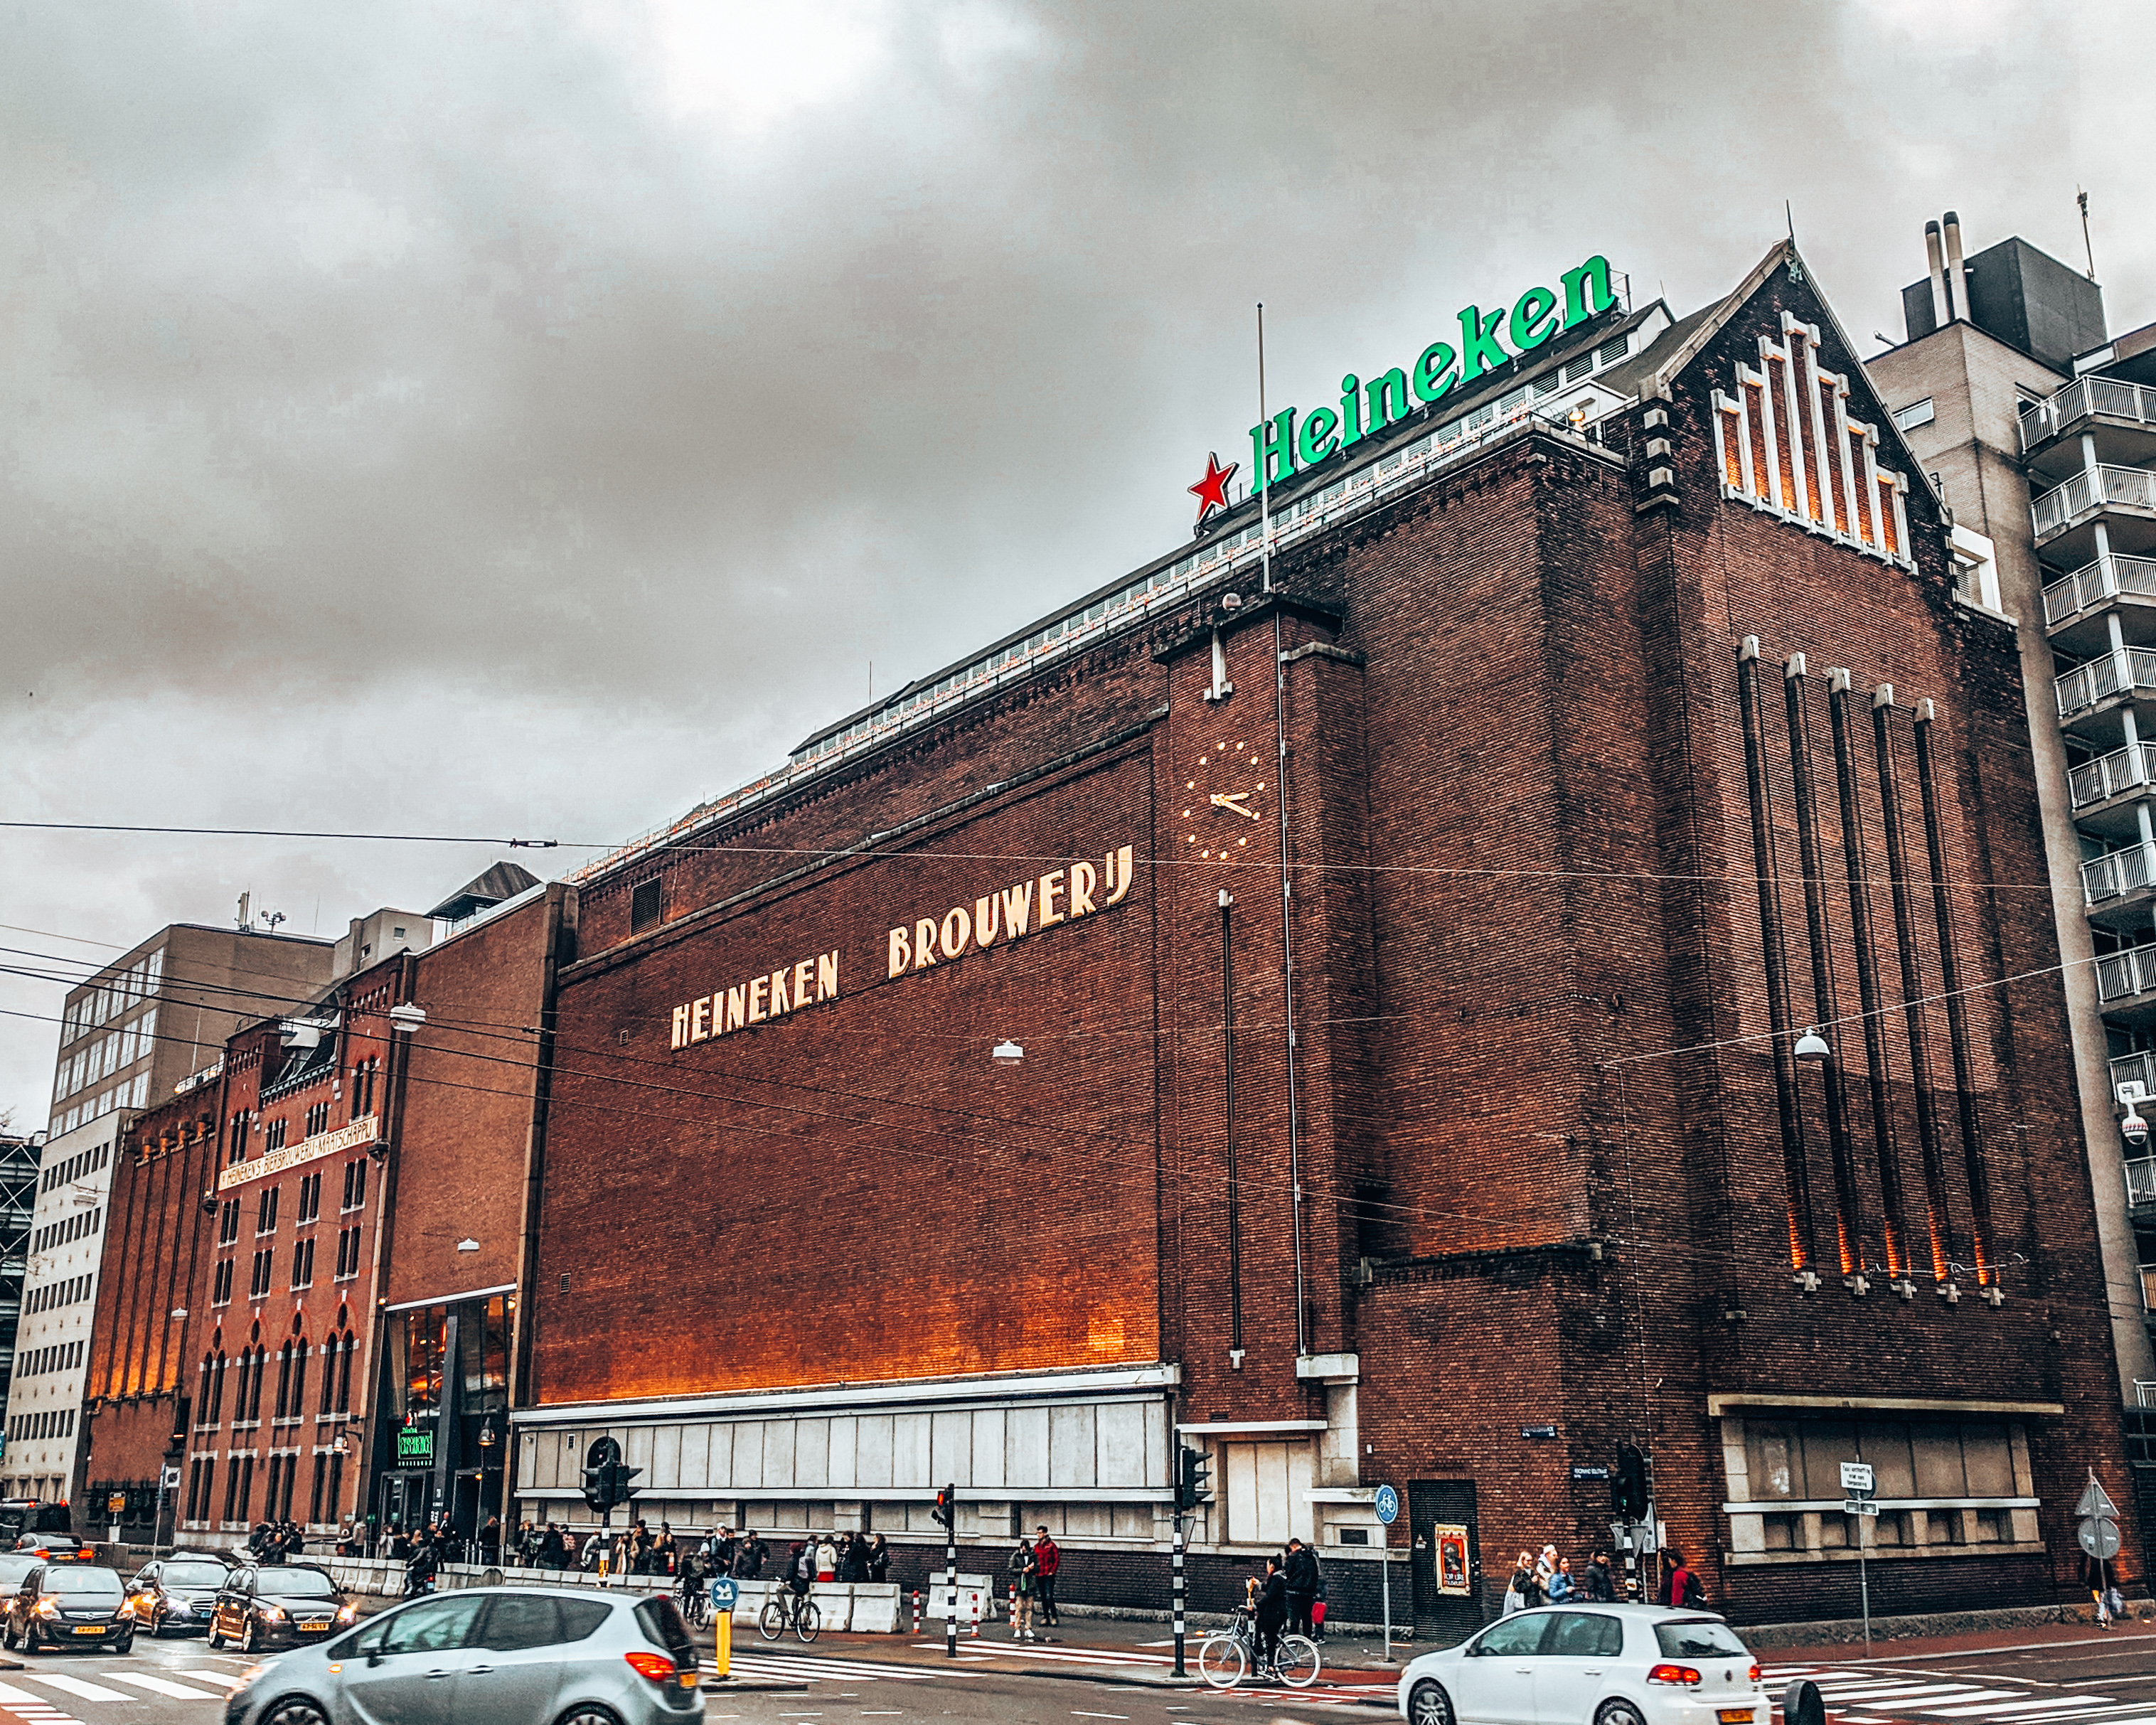 The Heineken brewery museum in Amsterdam, Netherlands